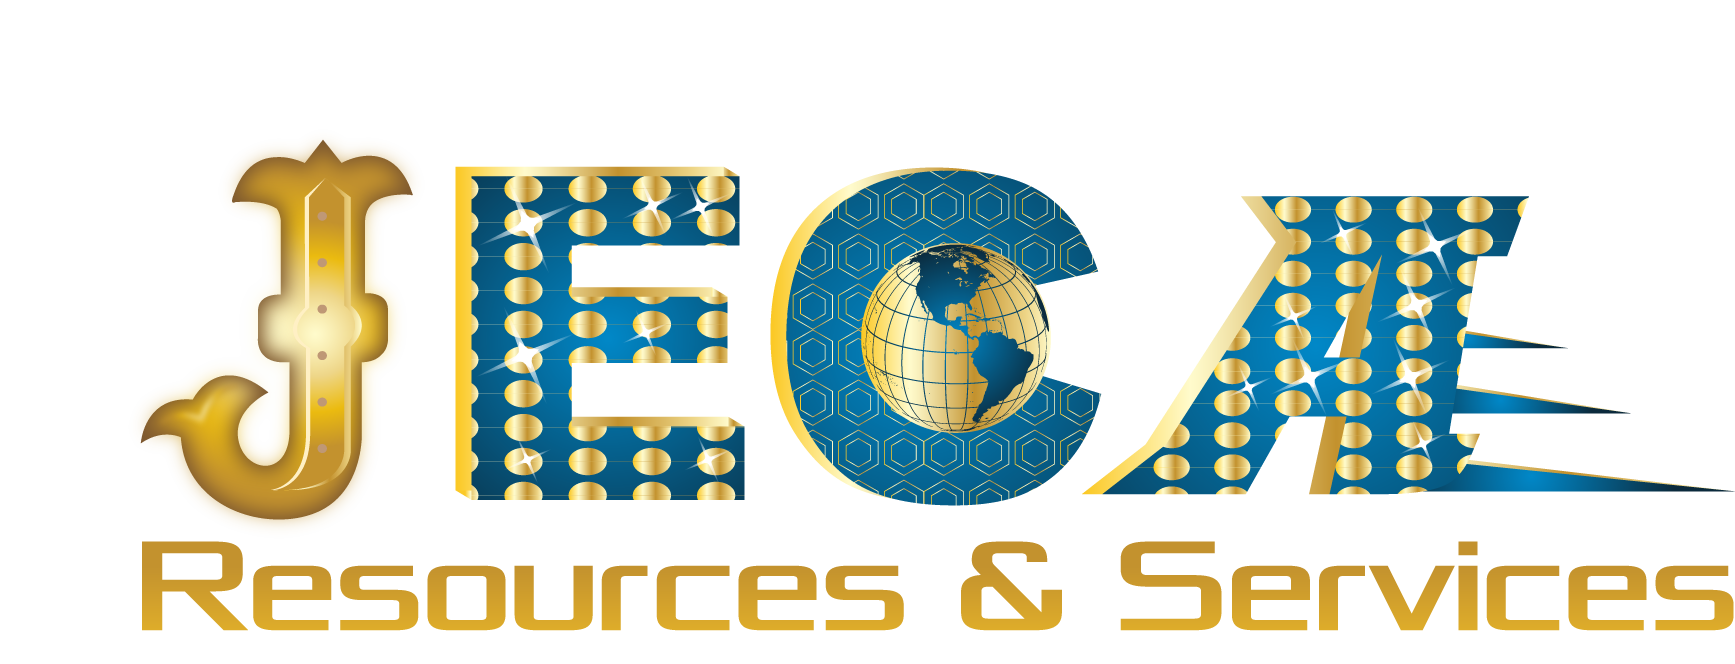 Jeca Resources & Services